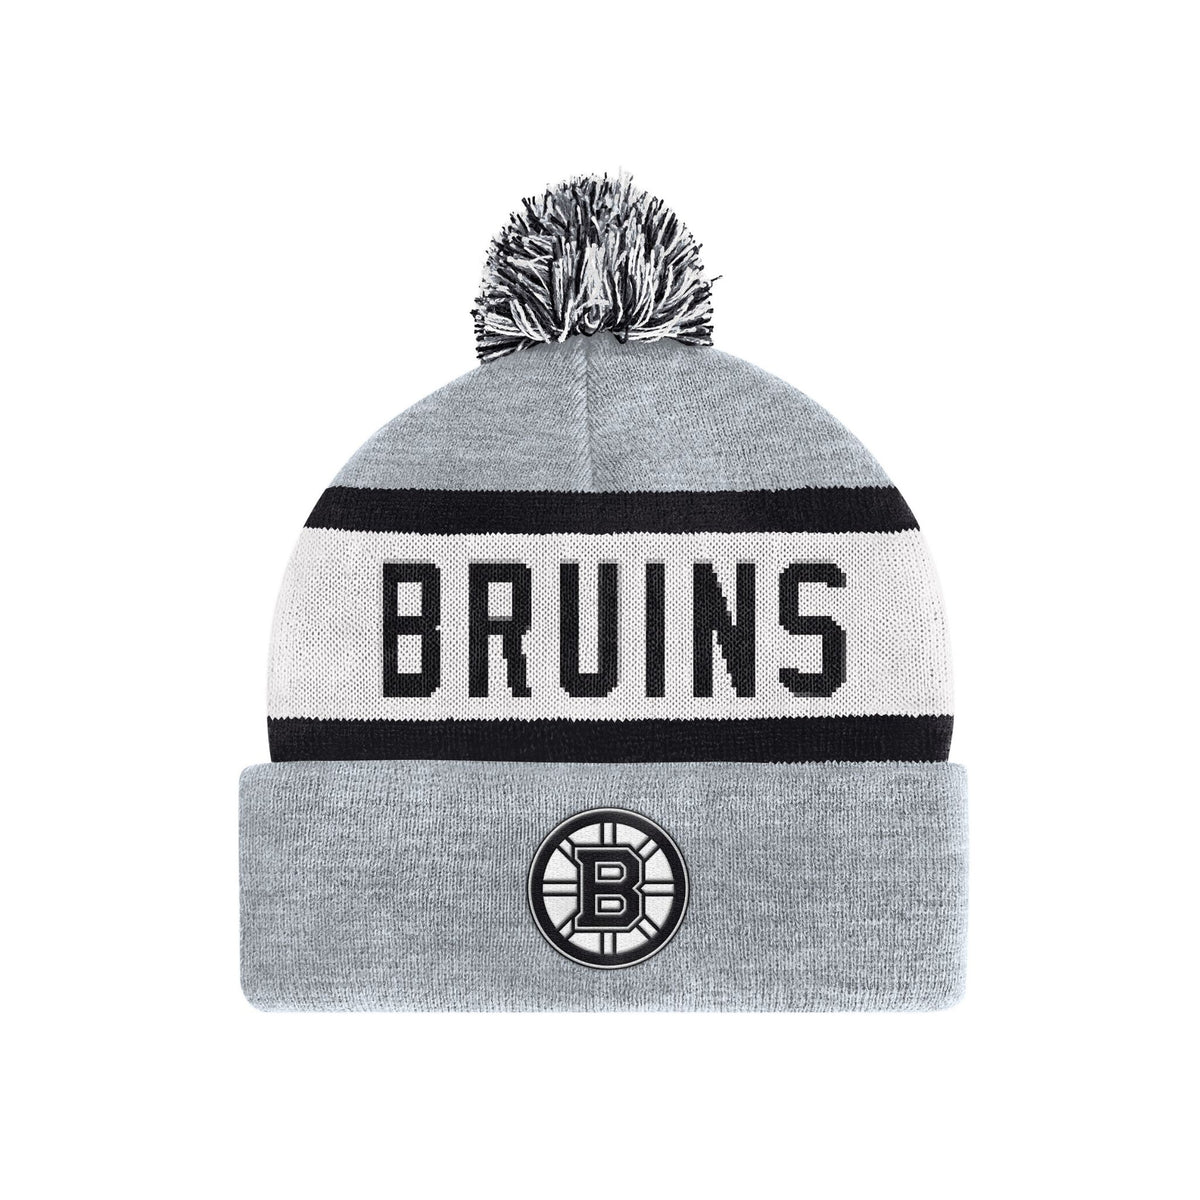 NHL Boston Bruins Black Ice Beanie